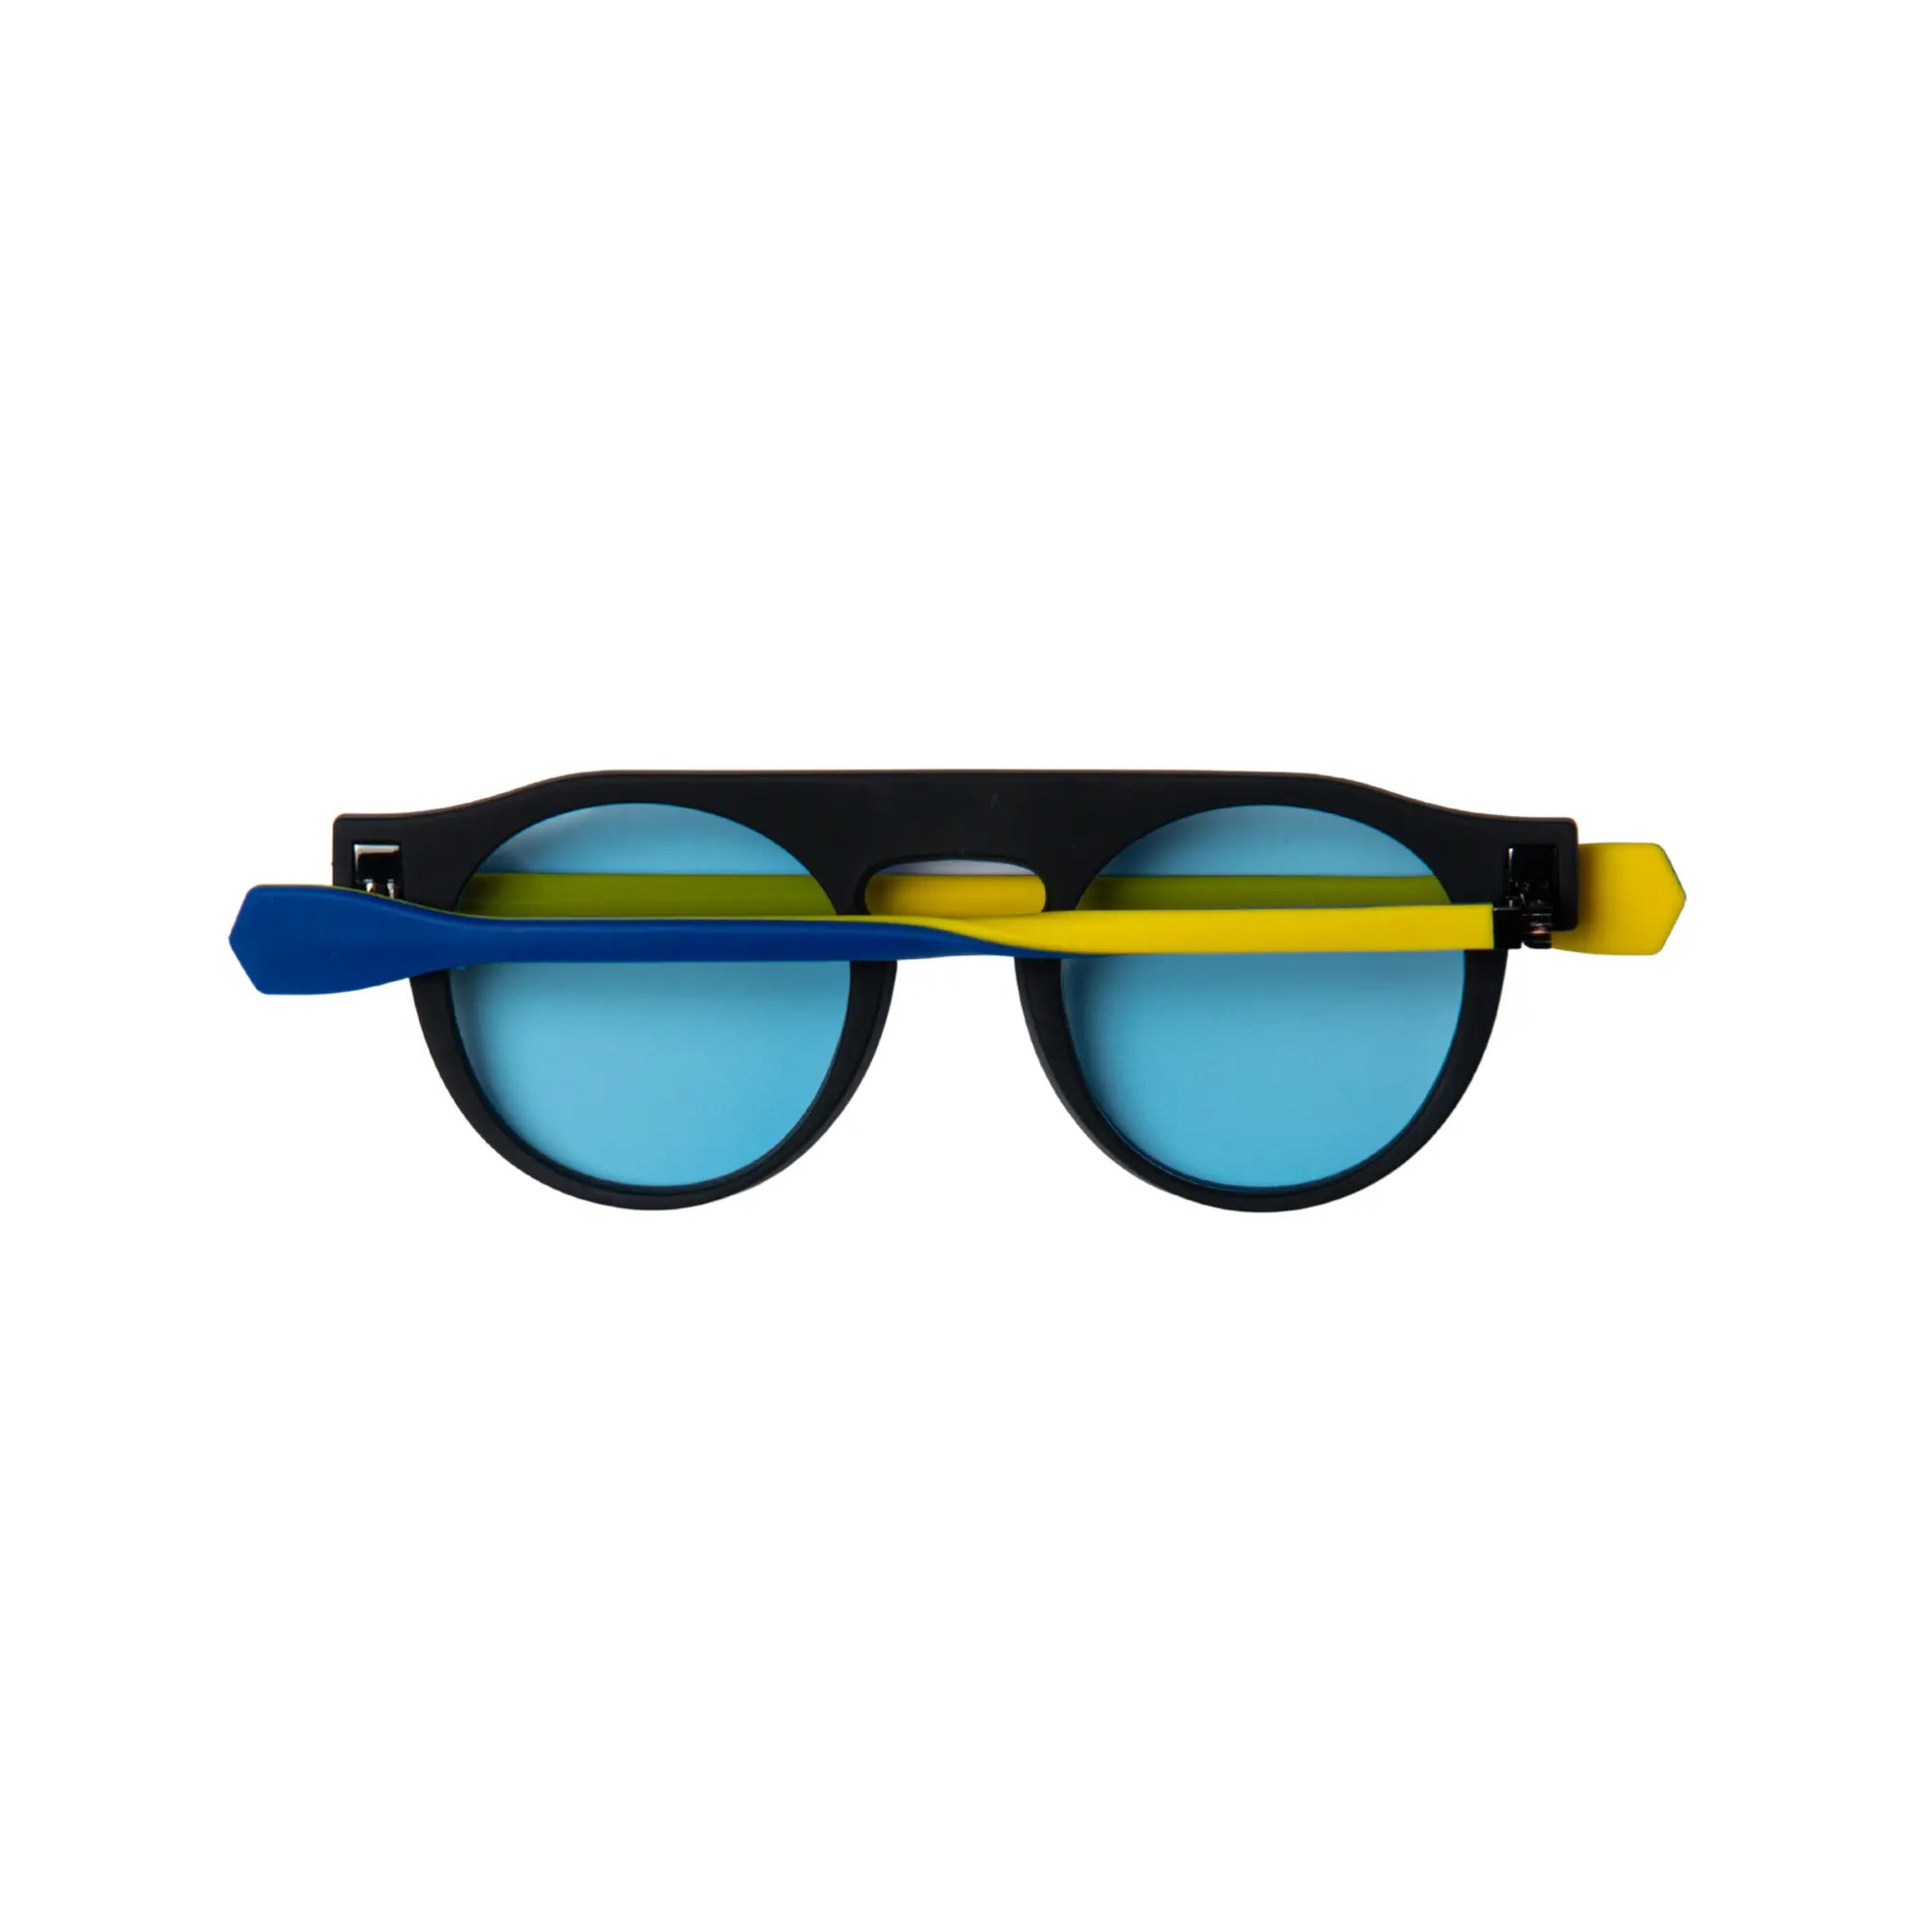 Reverso sunglasses black/Blue & yellow reversible & ultra light back view